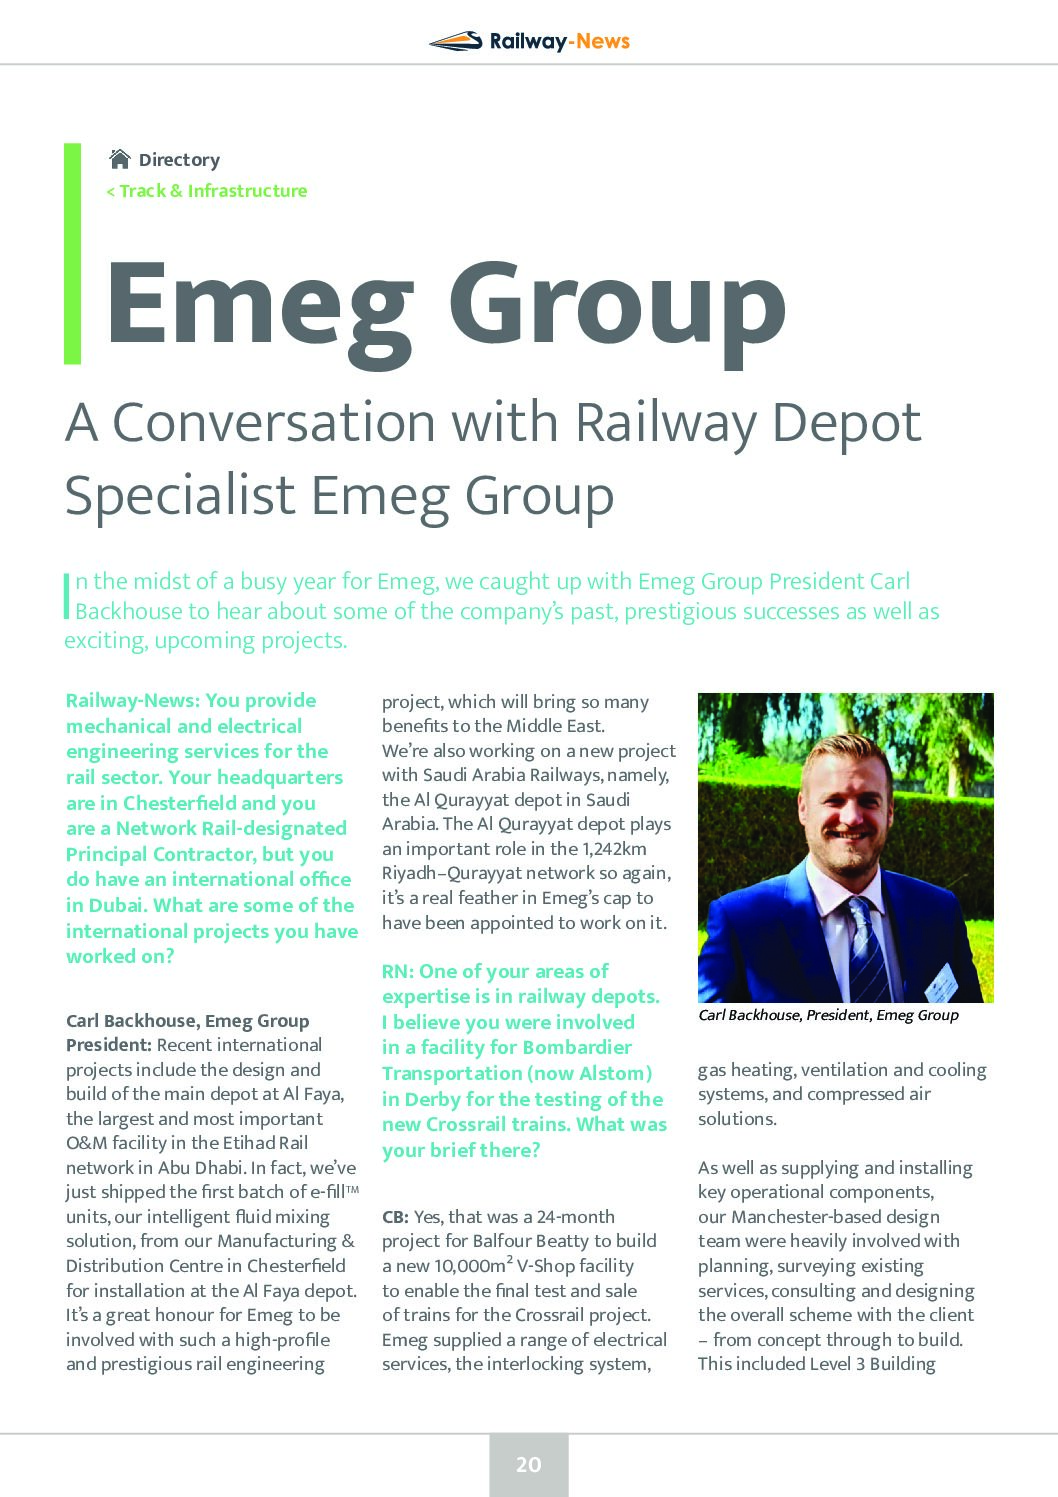 A Conversation with Railway Depot Specialist Emeg Group